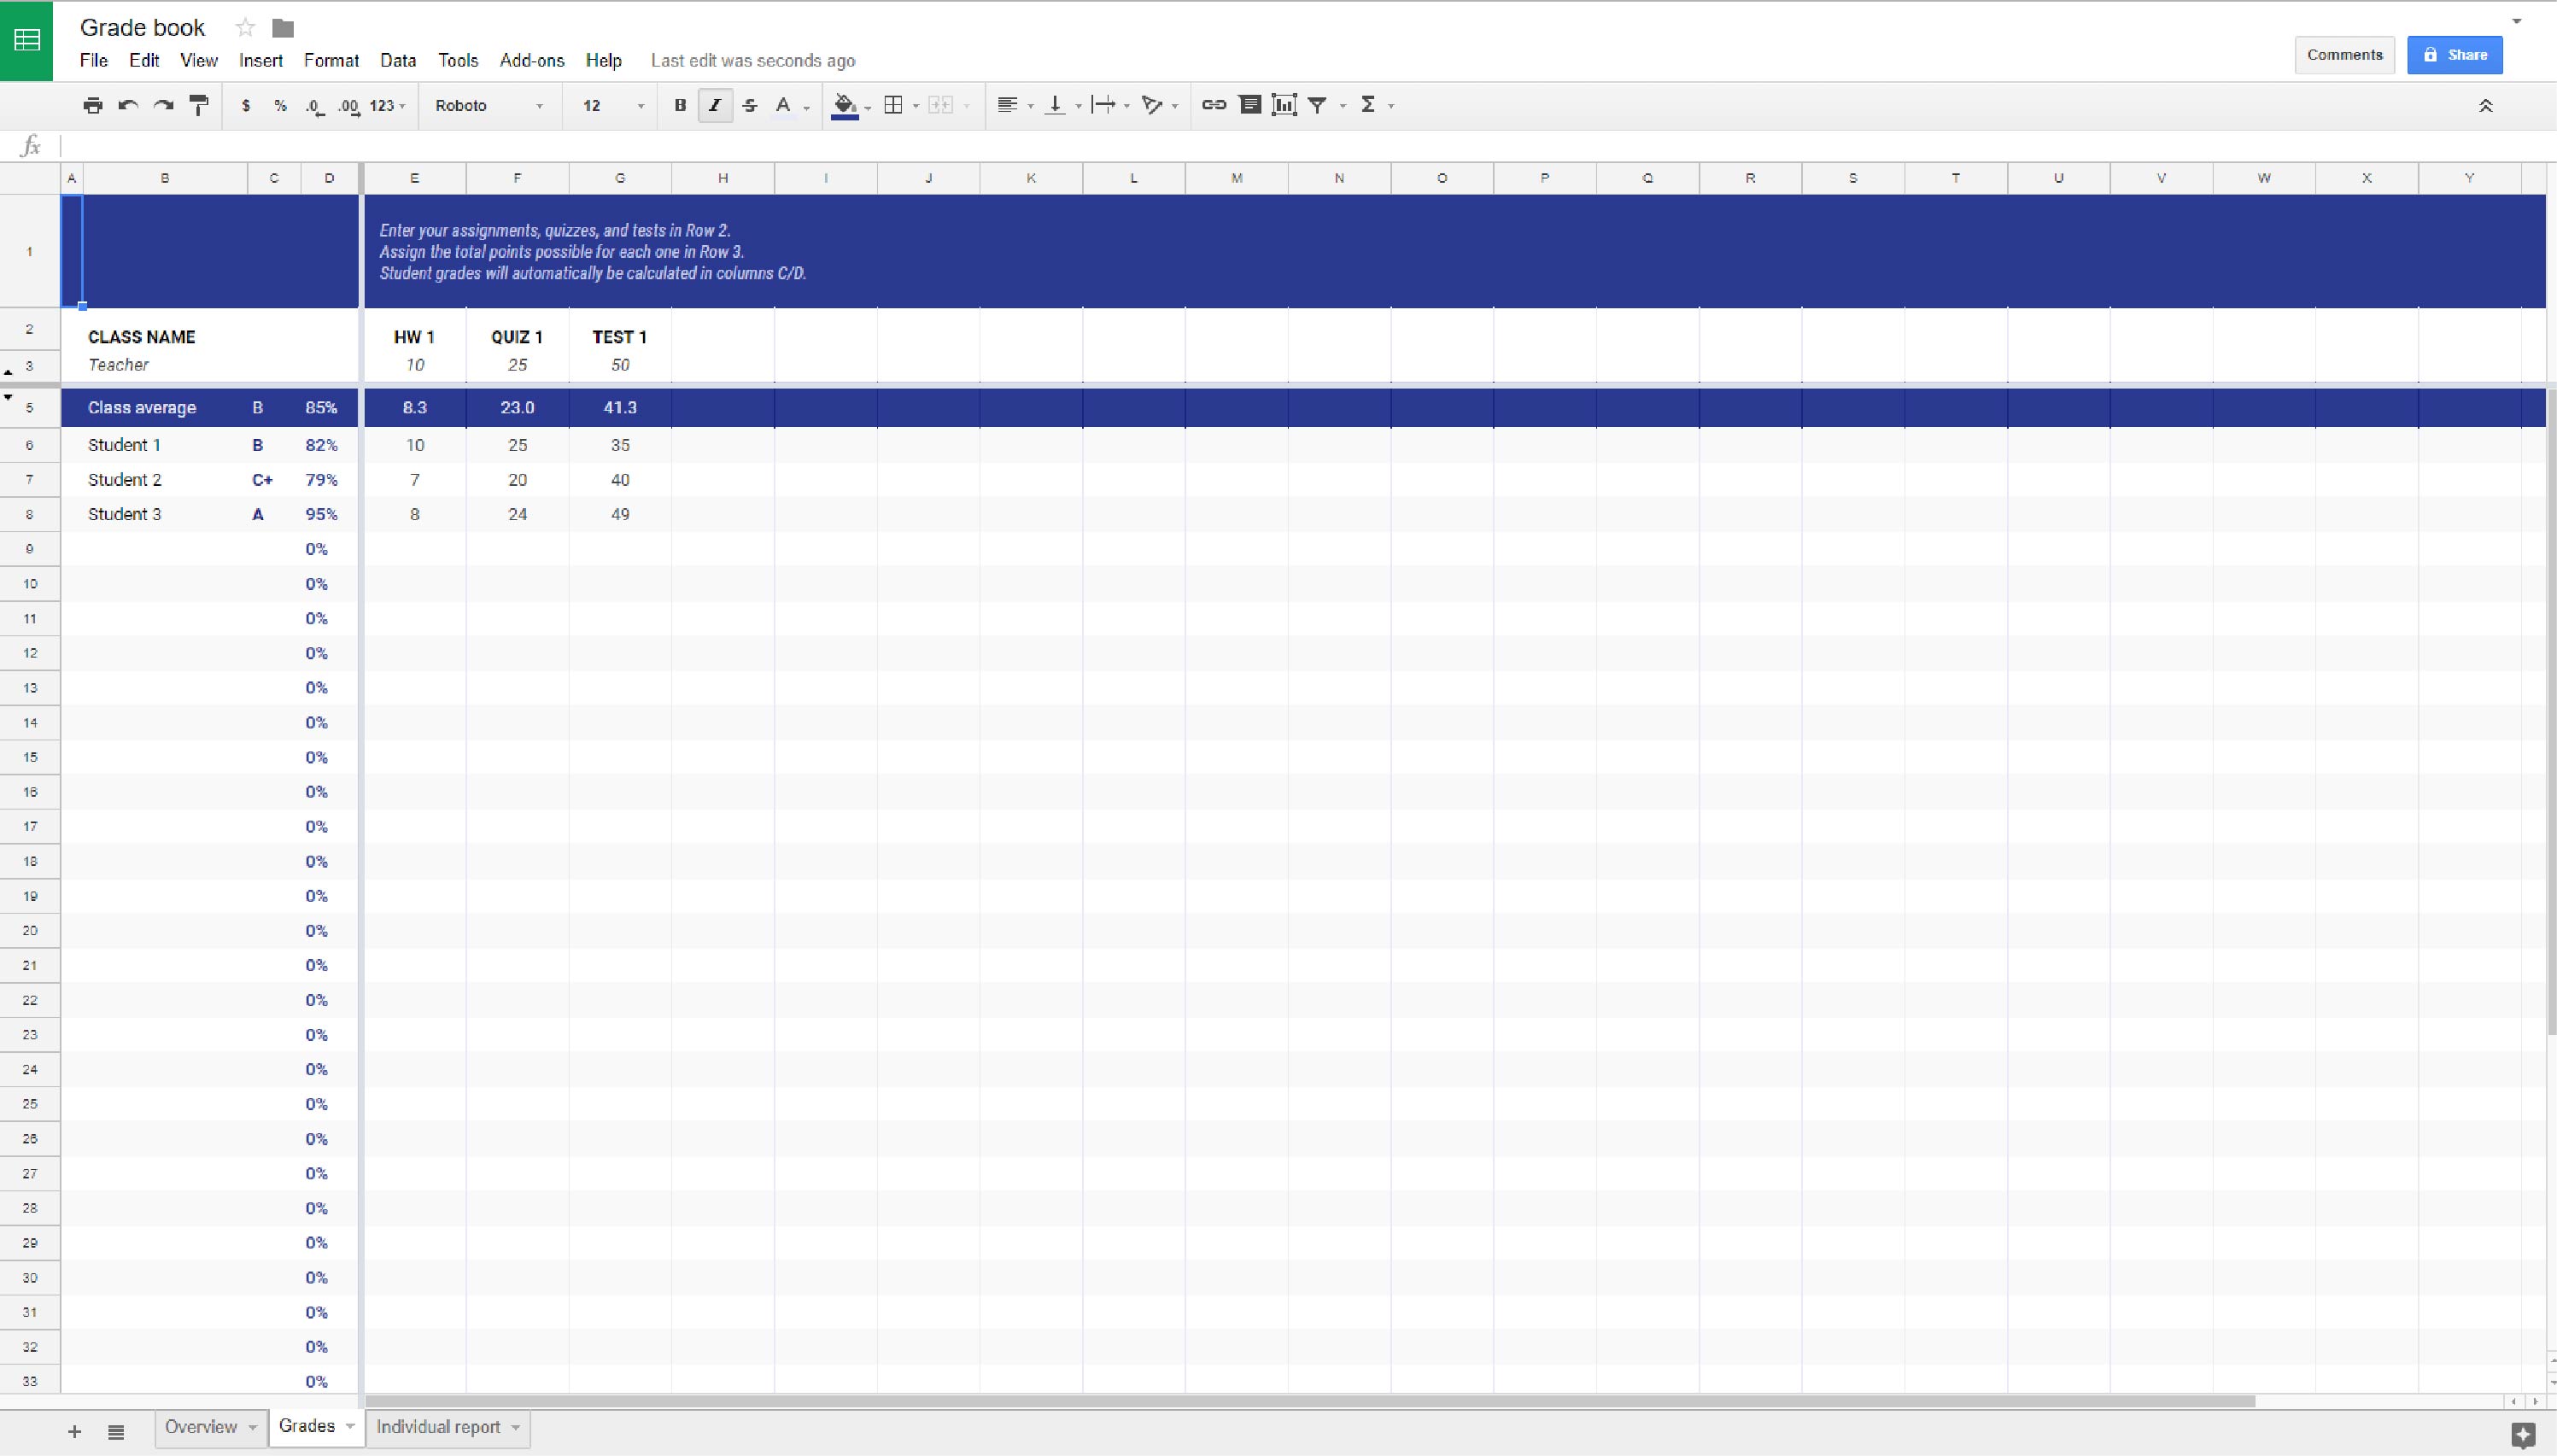 Image of a gradebook spreadsheet open in Google Sheets.